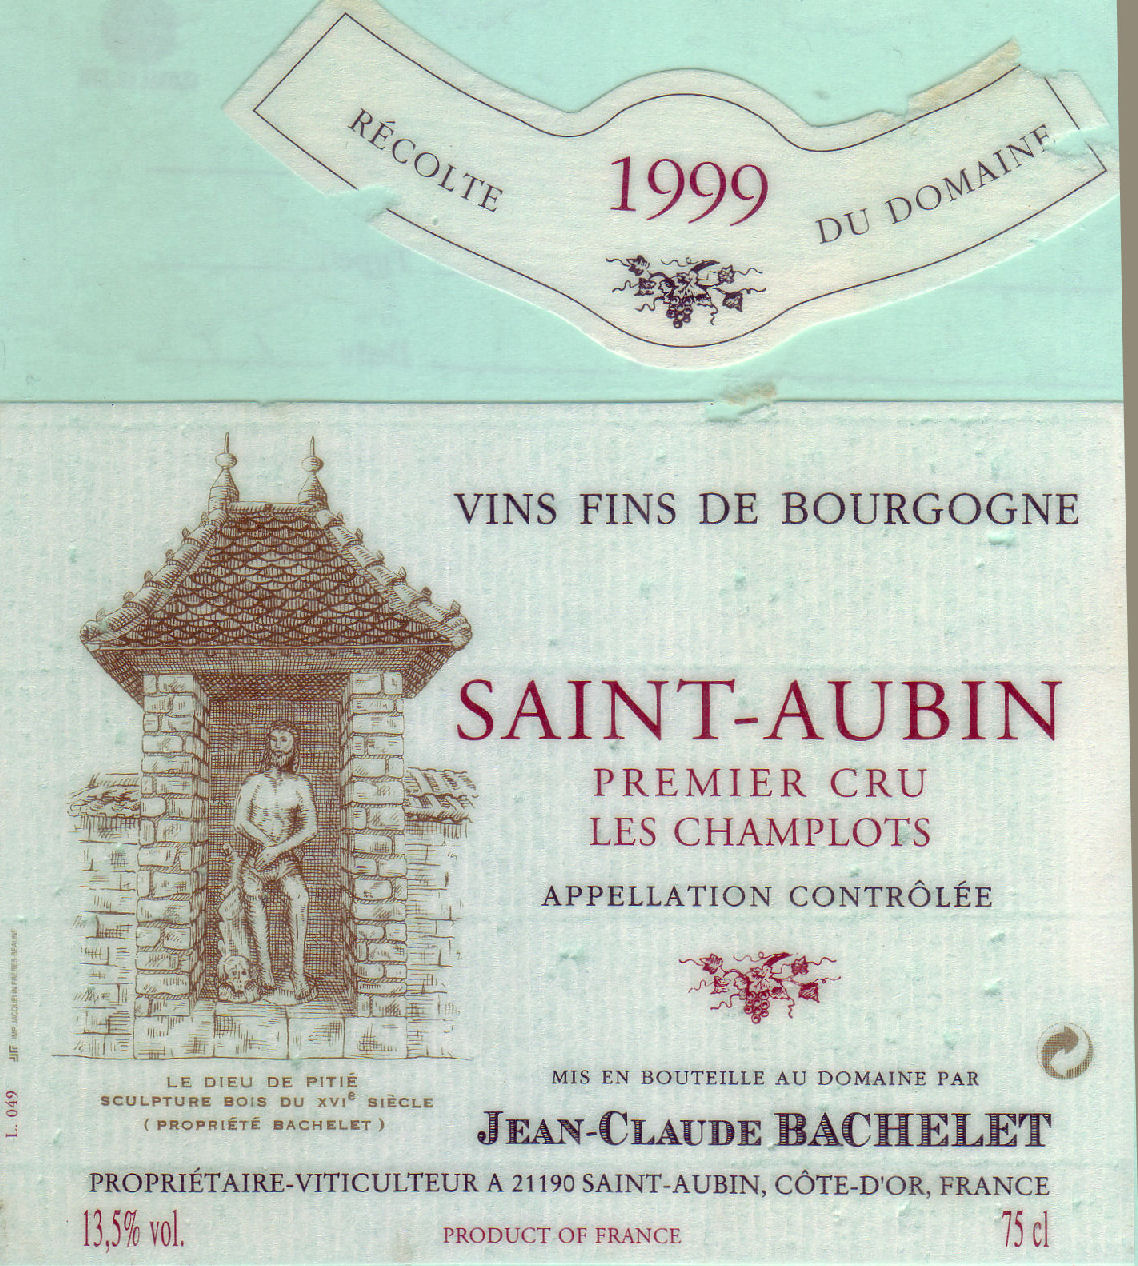 LES CHAMPOTS 1999 Premier cru Sant-Aubin_a0066081_71011.jpg